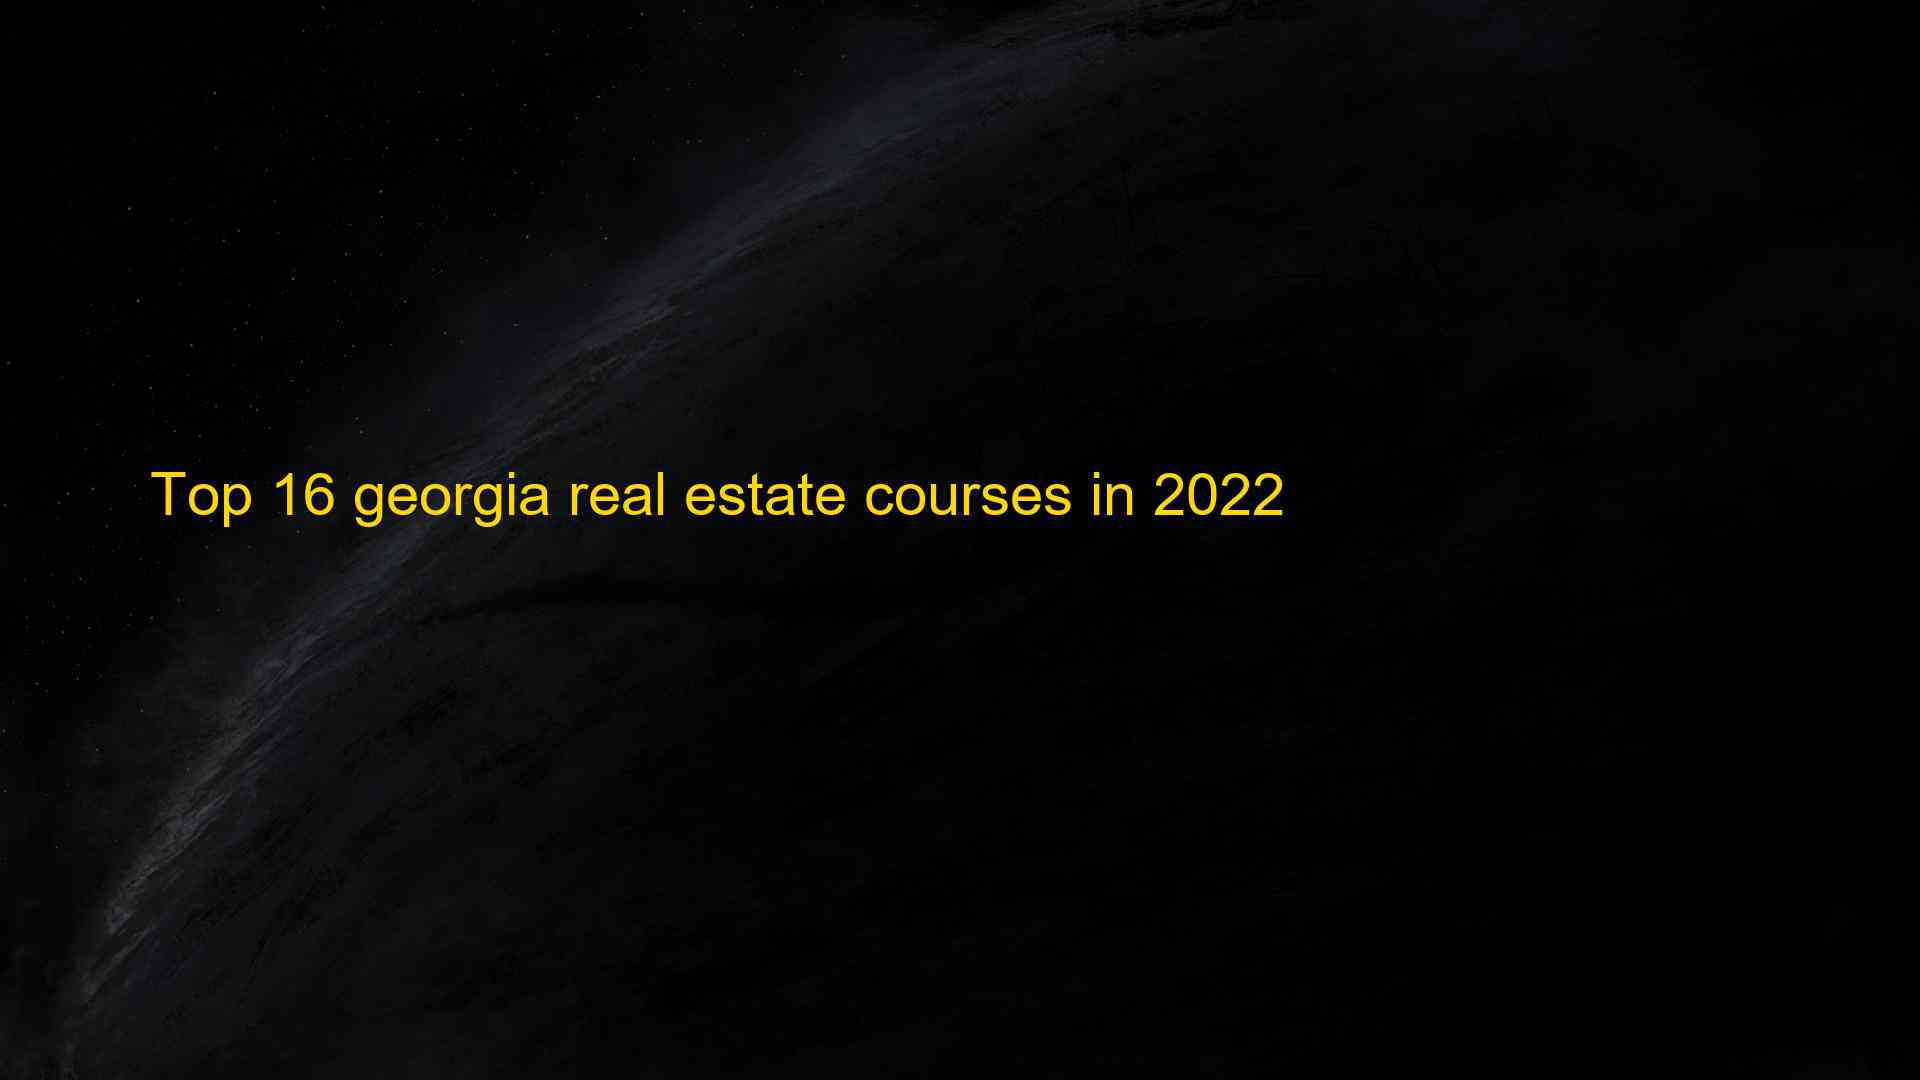 Top 16 georgia real estate courses in 2022 1661778950